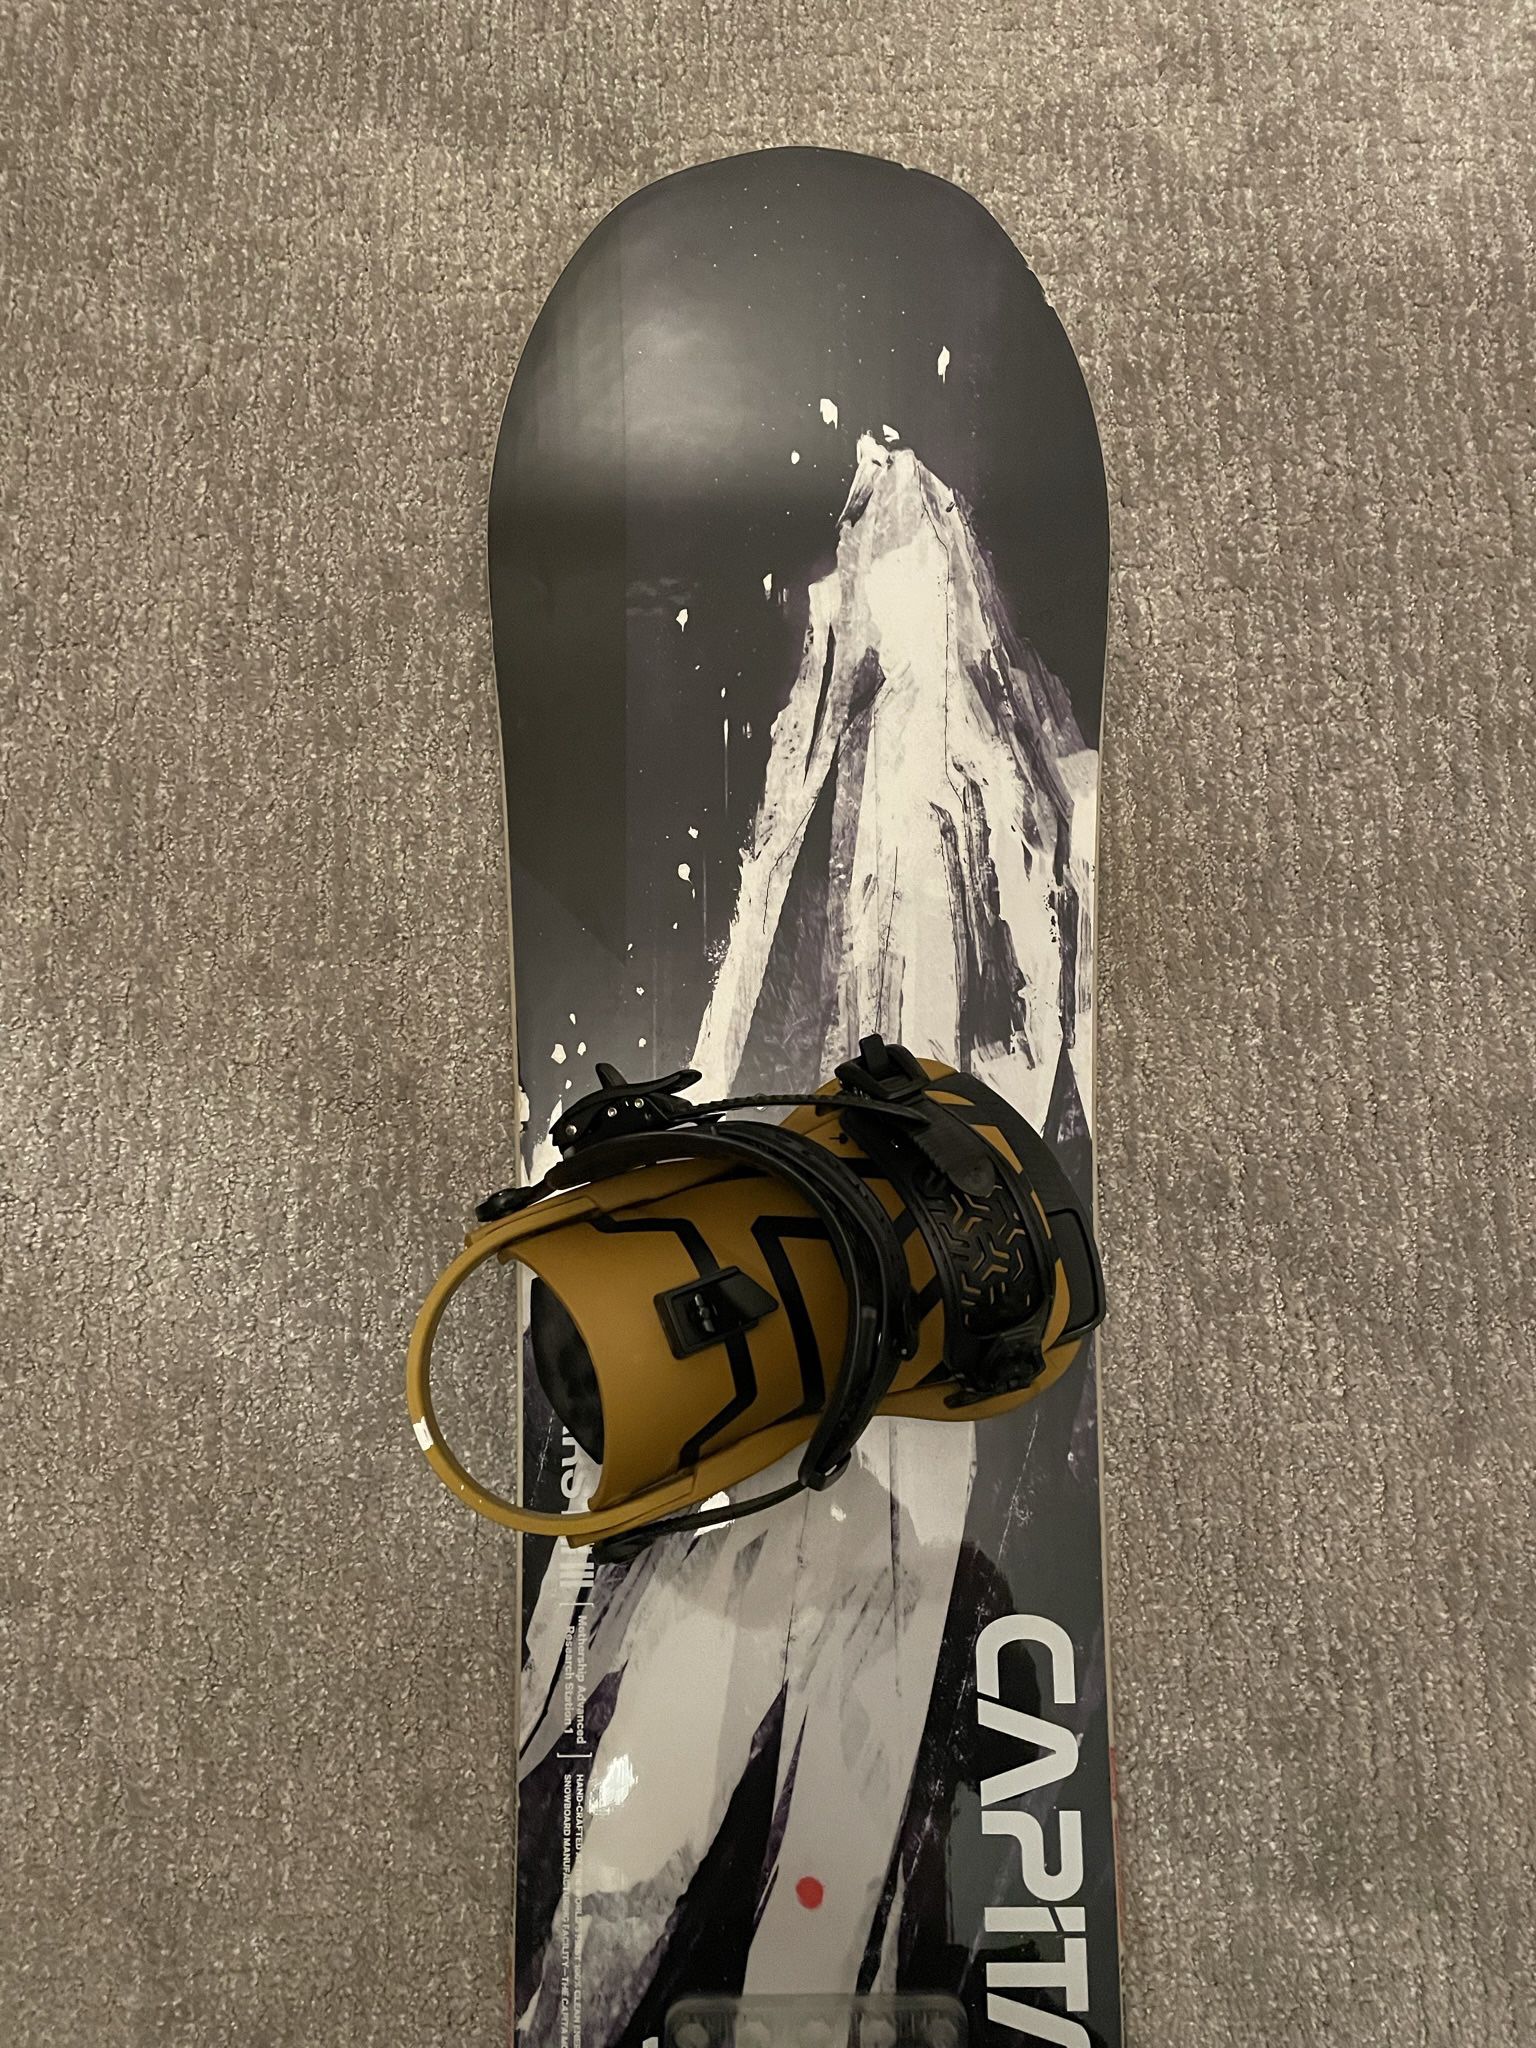 Capita Mercury Snowboard 155 Cm for Sale in Bellevue, WA - OfferUp